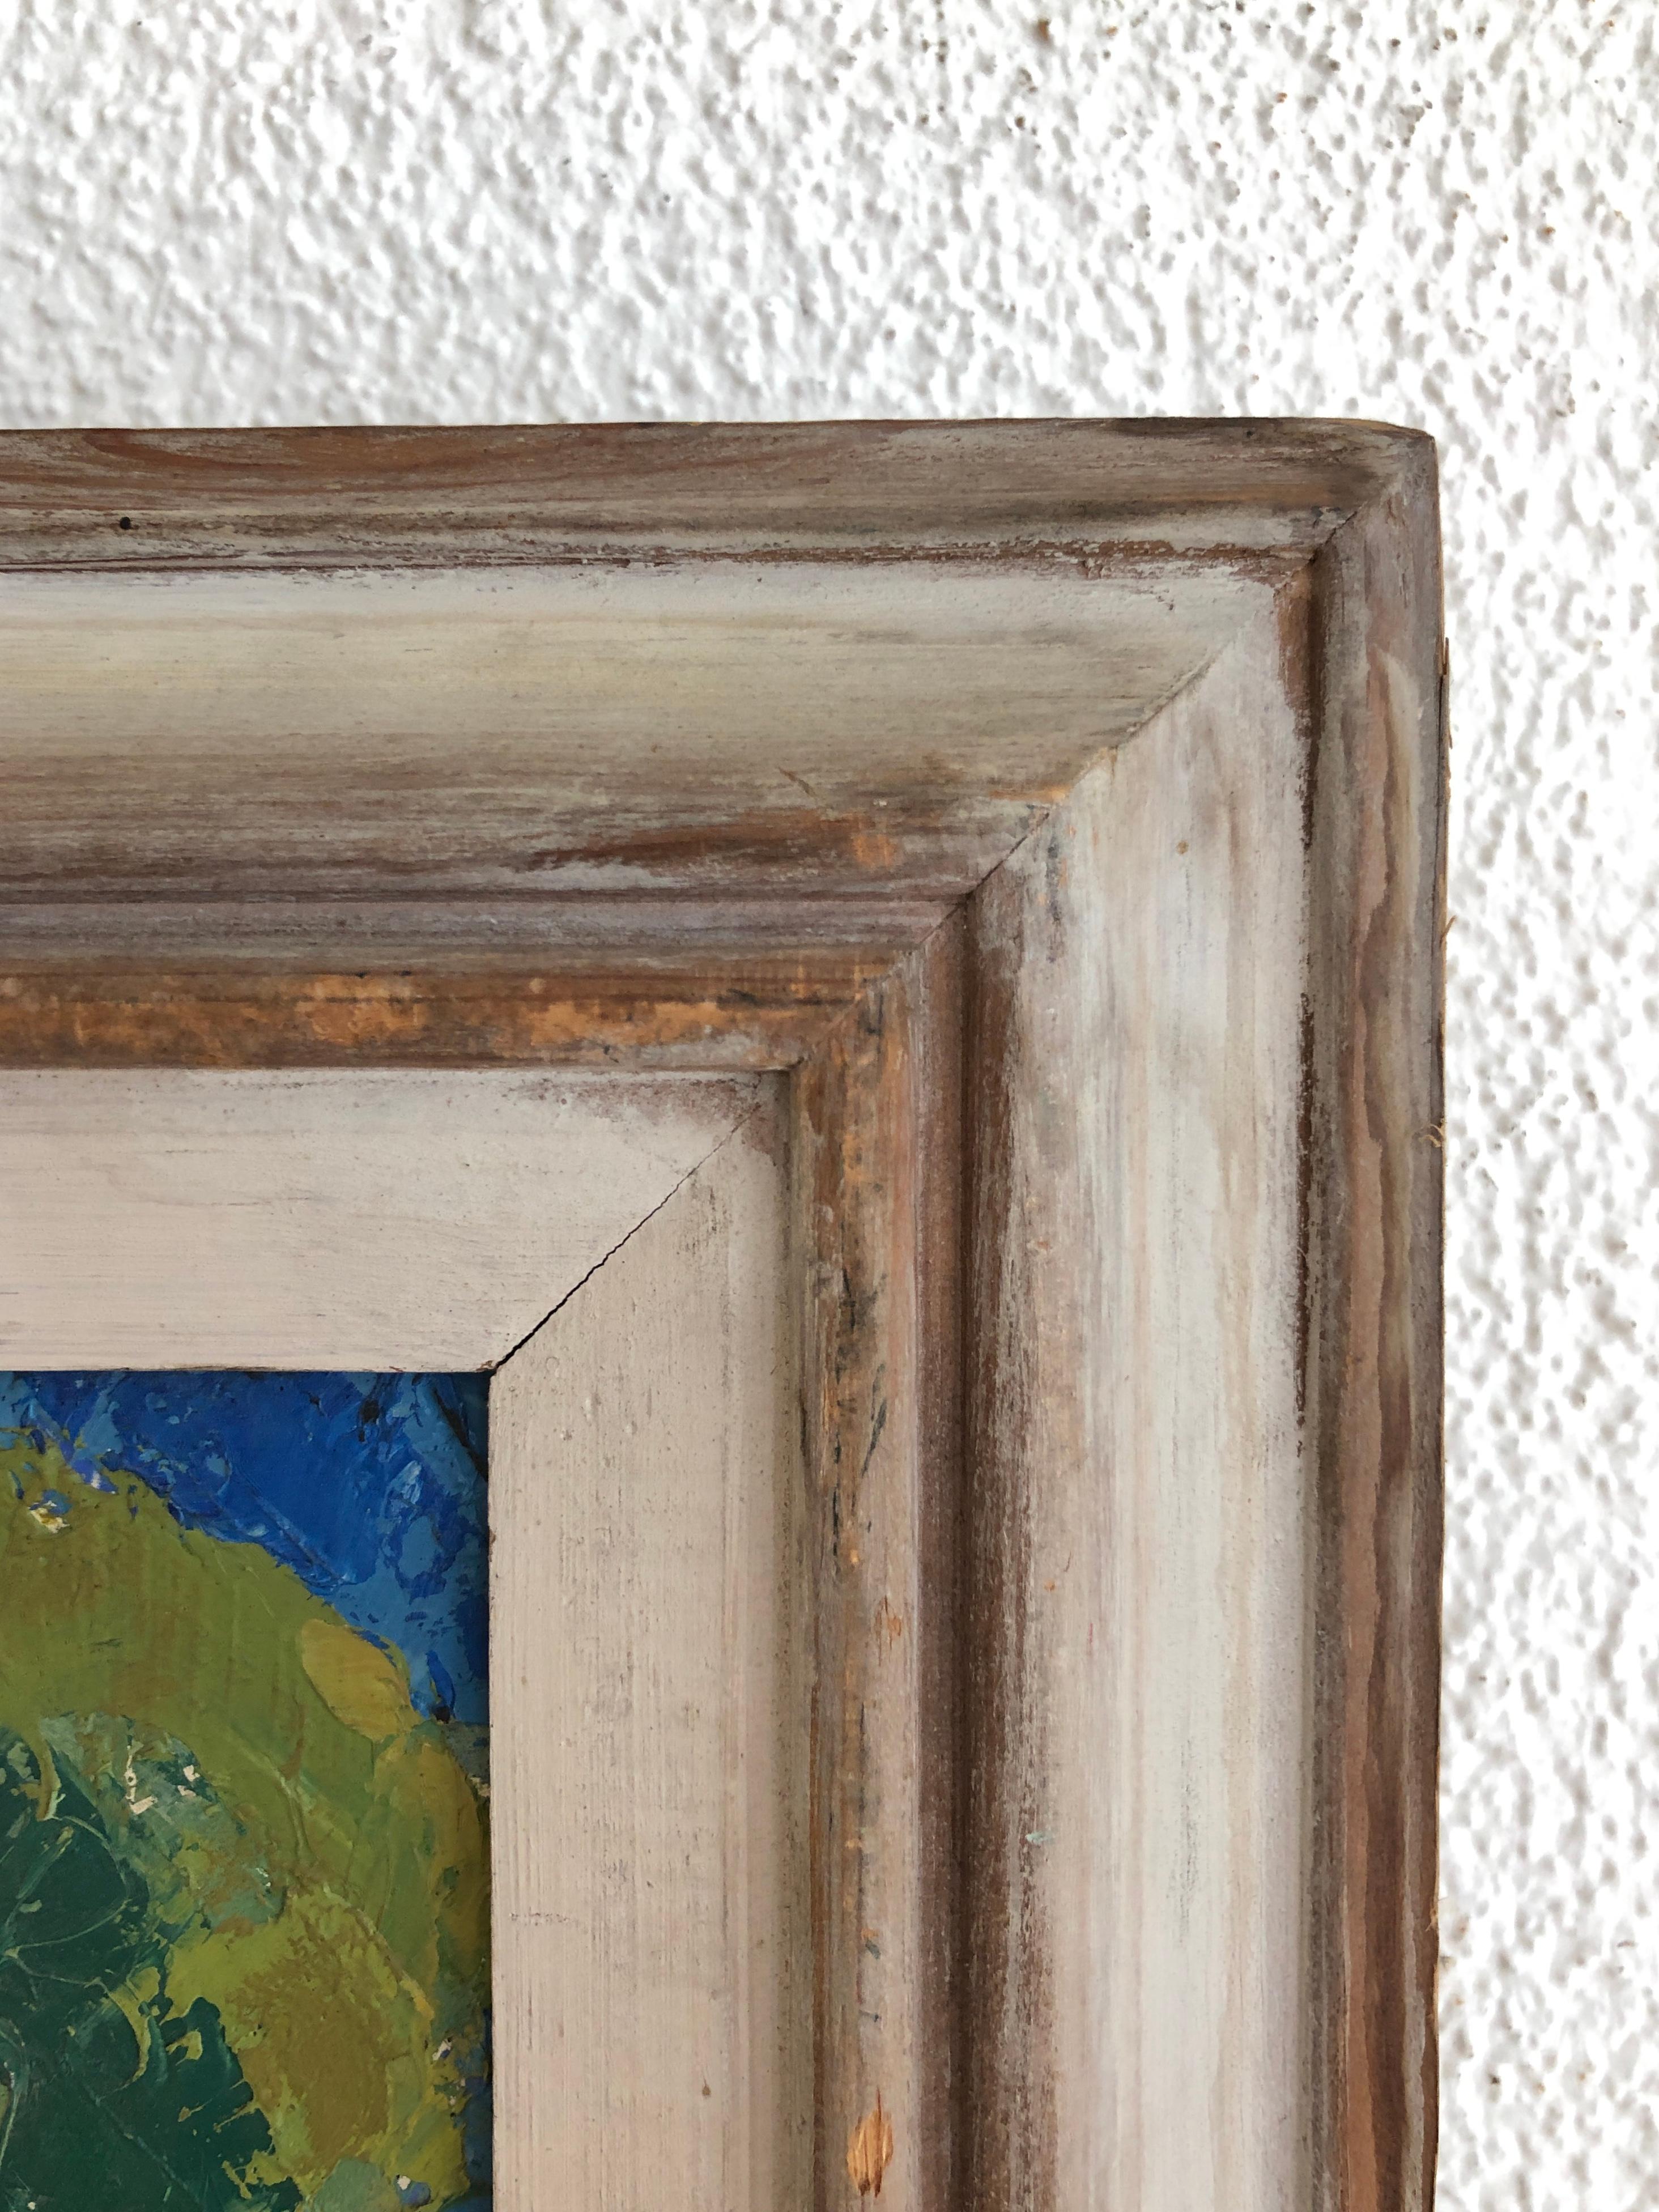 Work on wood
Gray wooden frame
74 x 87 x 3 cm